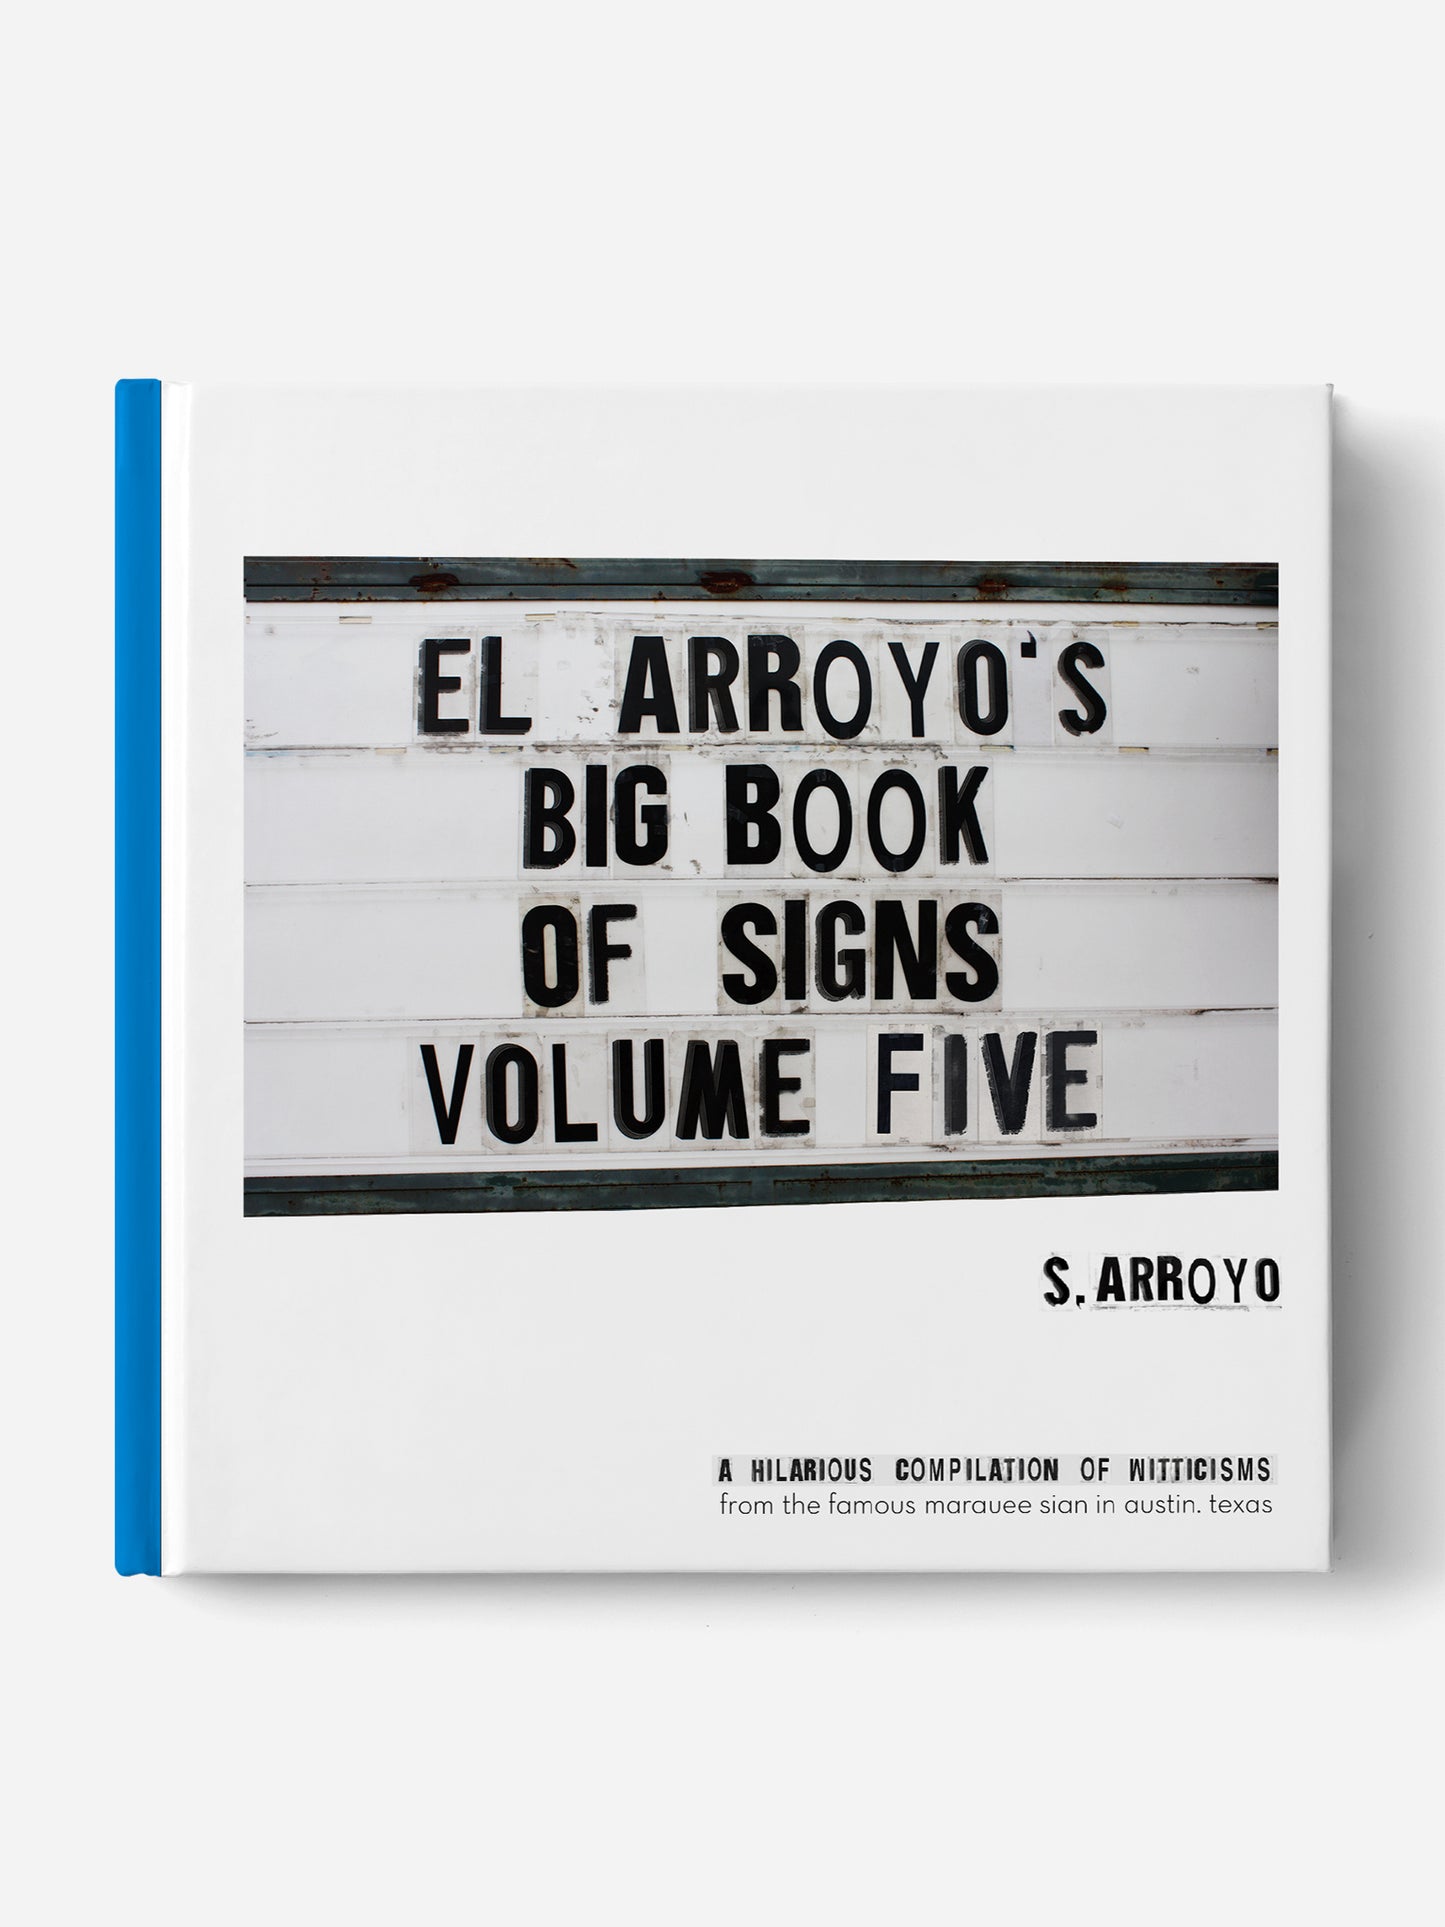 El Arroyo's Big Book of Signs Vol. 5